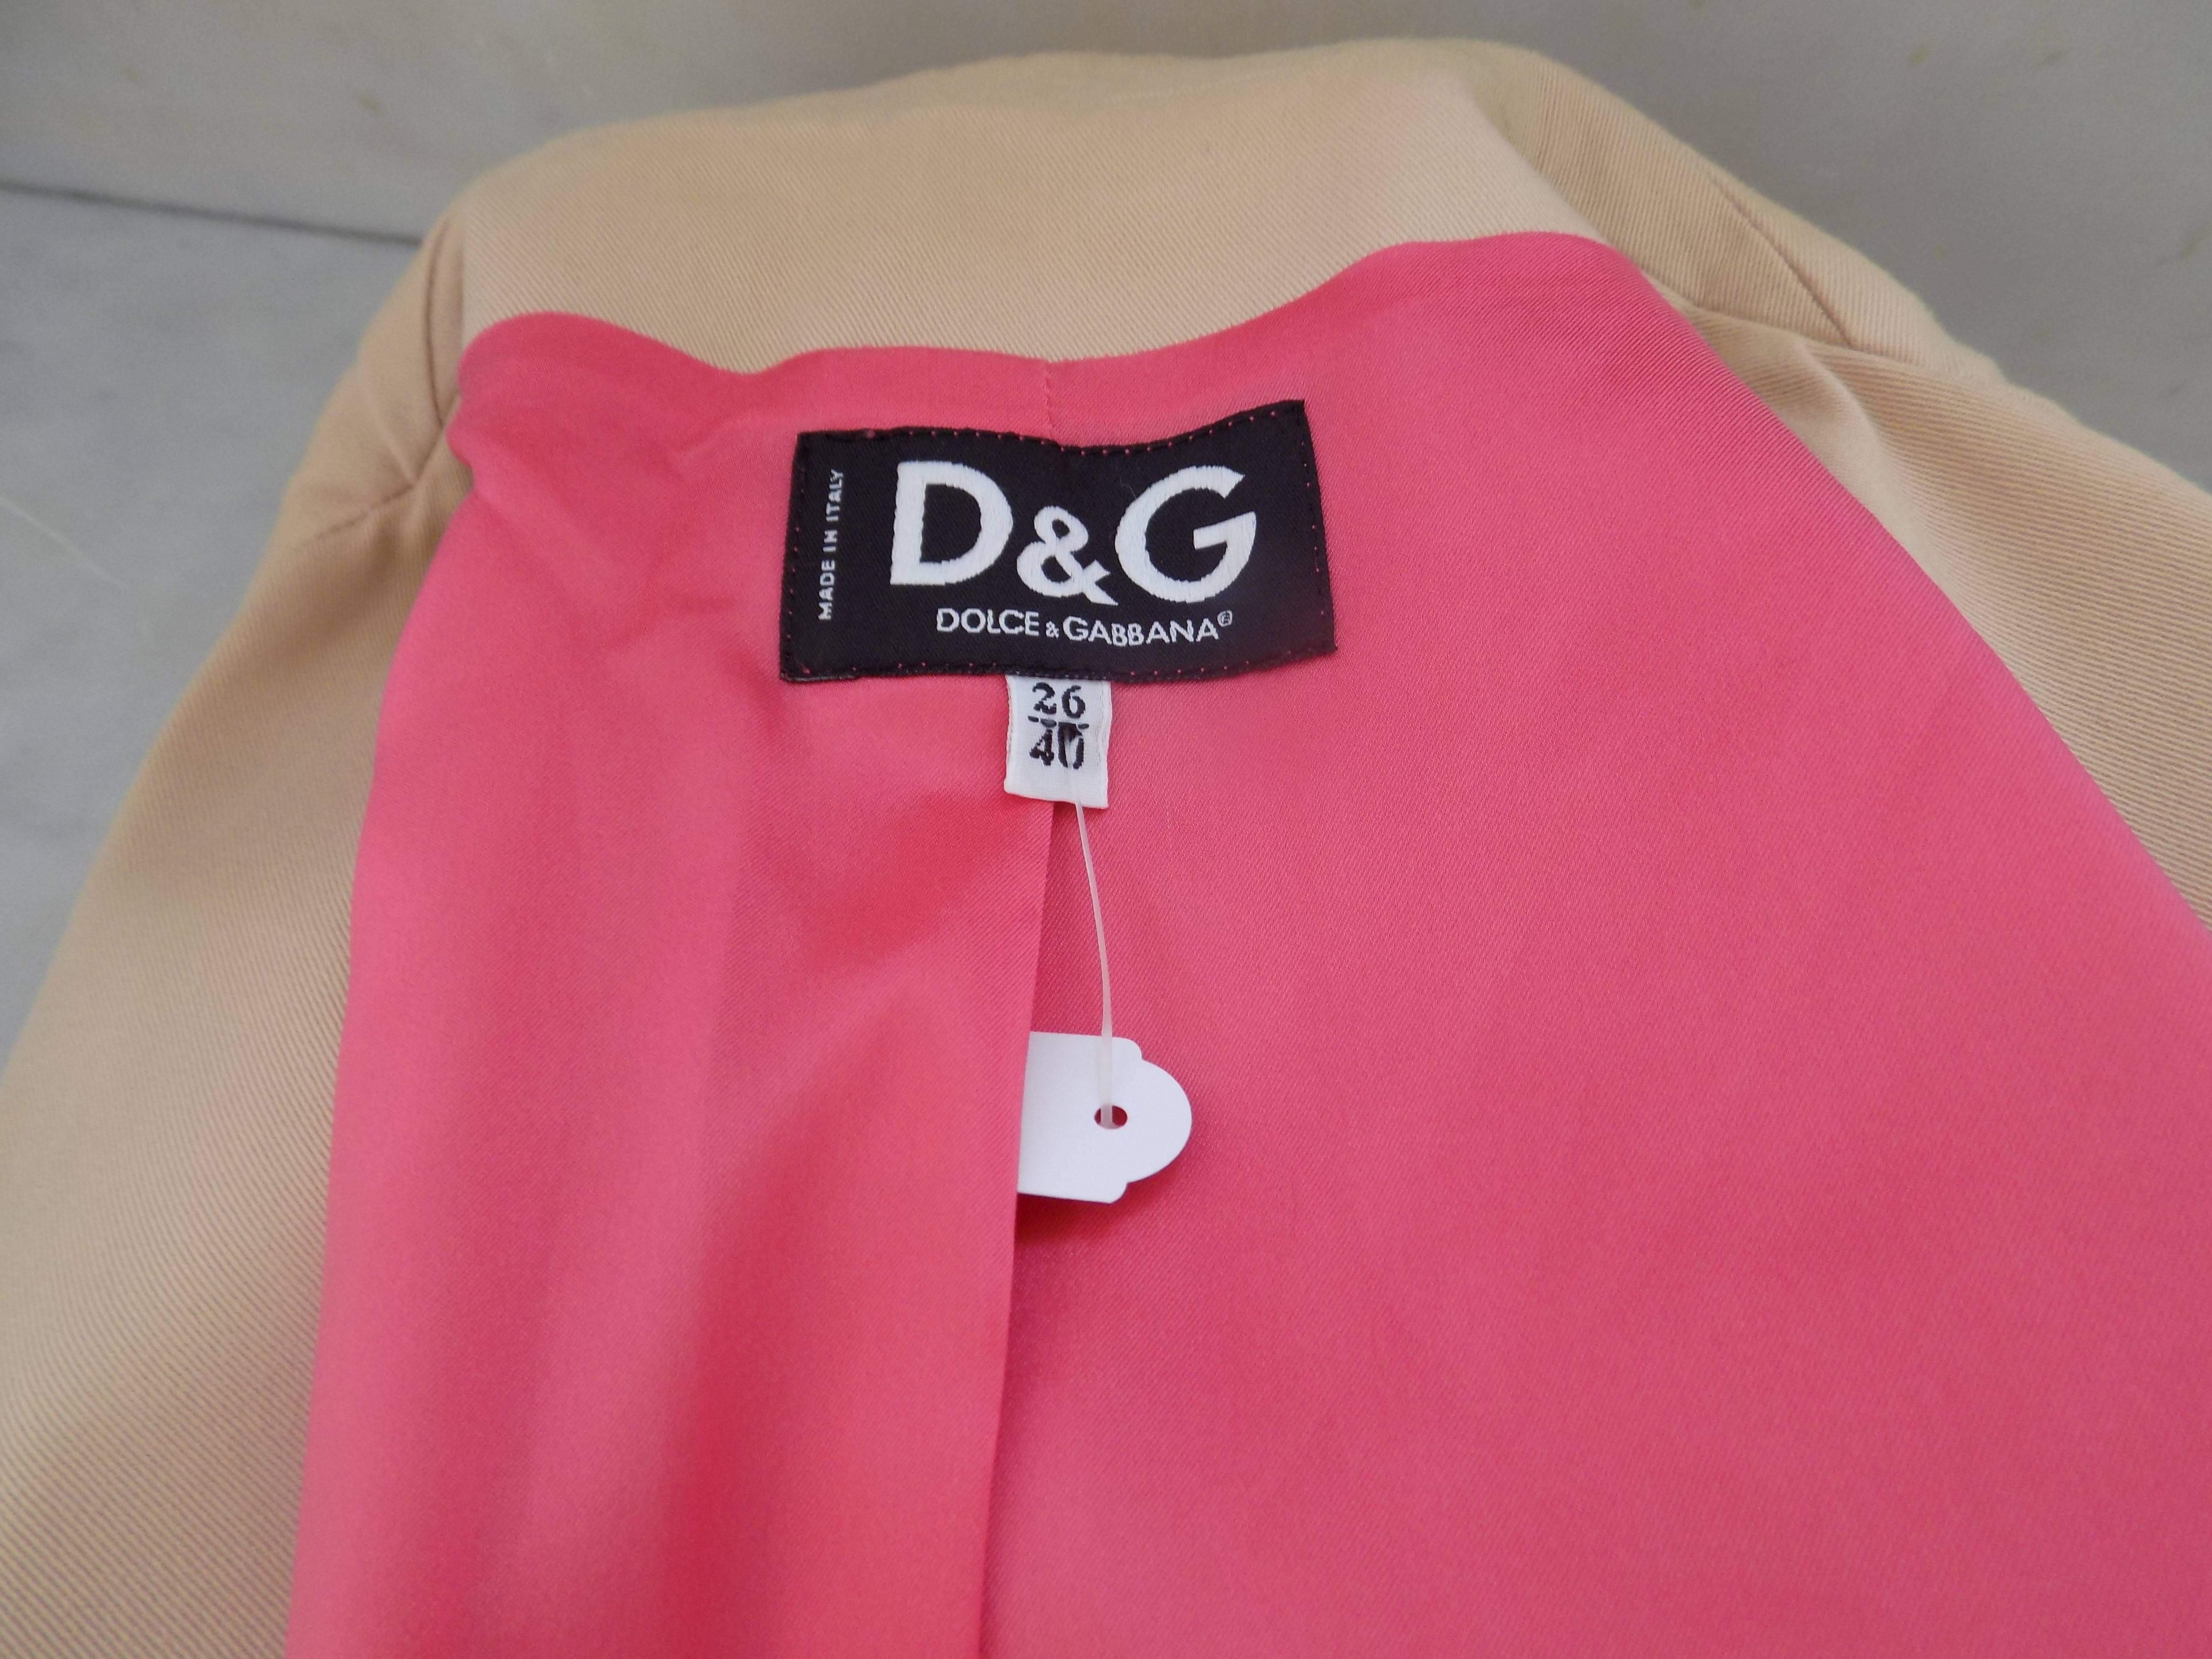 D&G Beije Cotton Jacket In Excellent Condition For Sale In Capri, IT